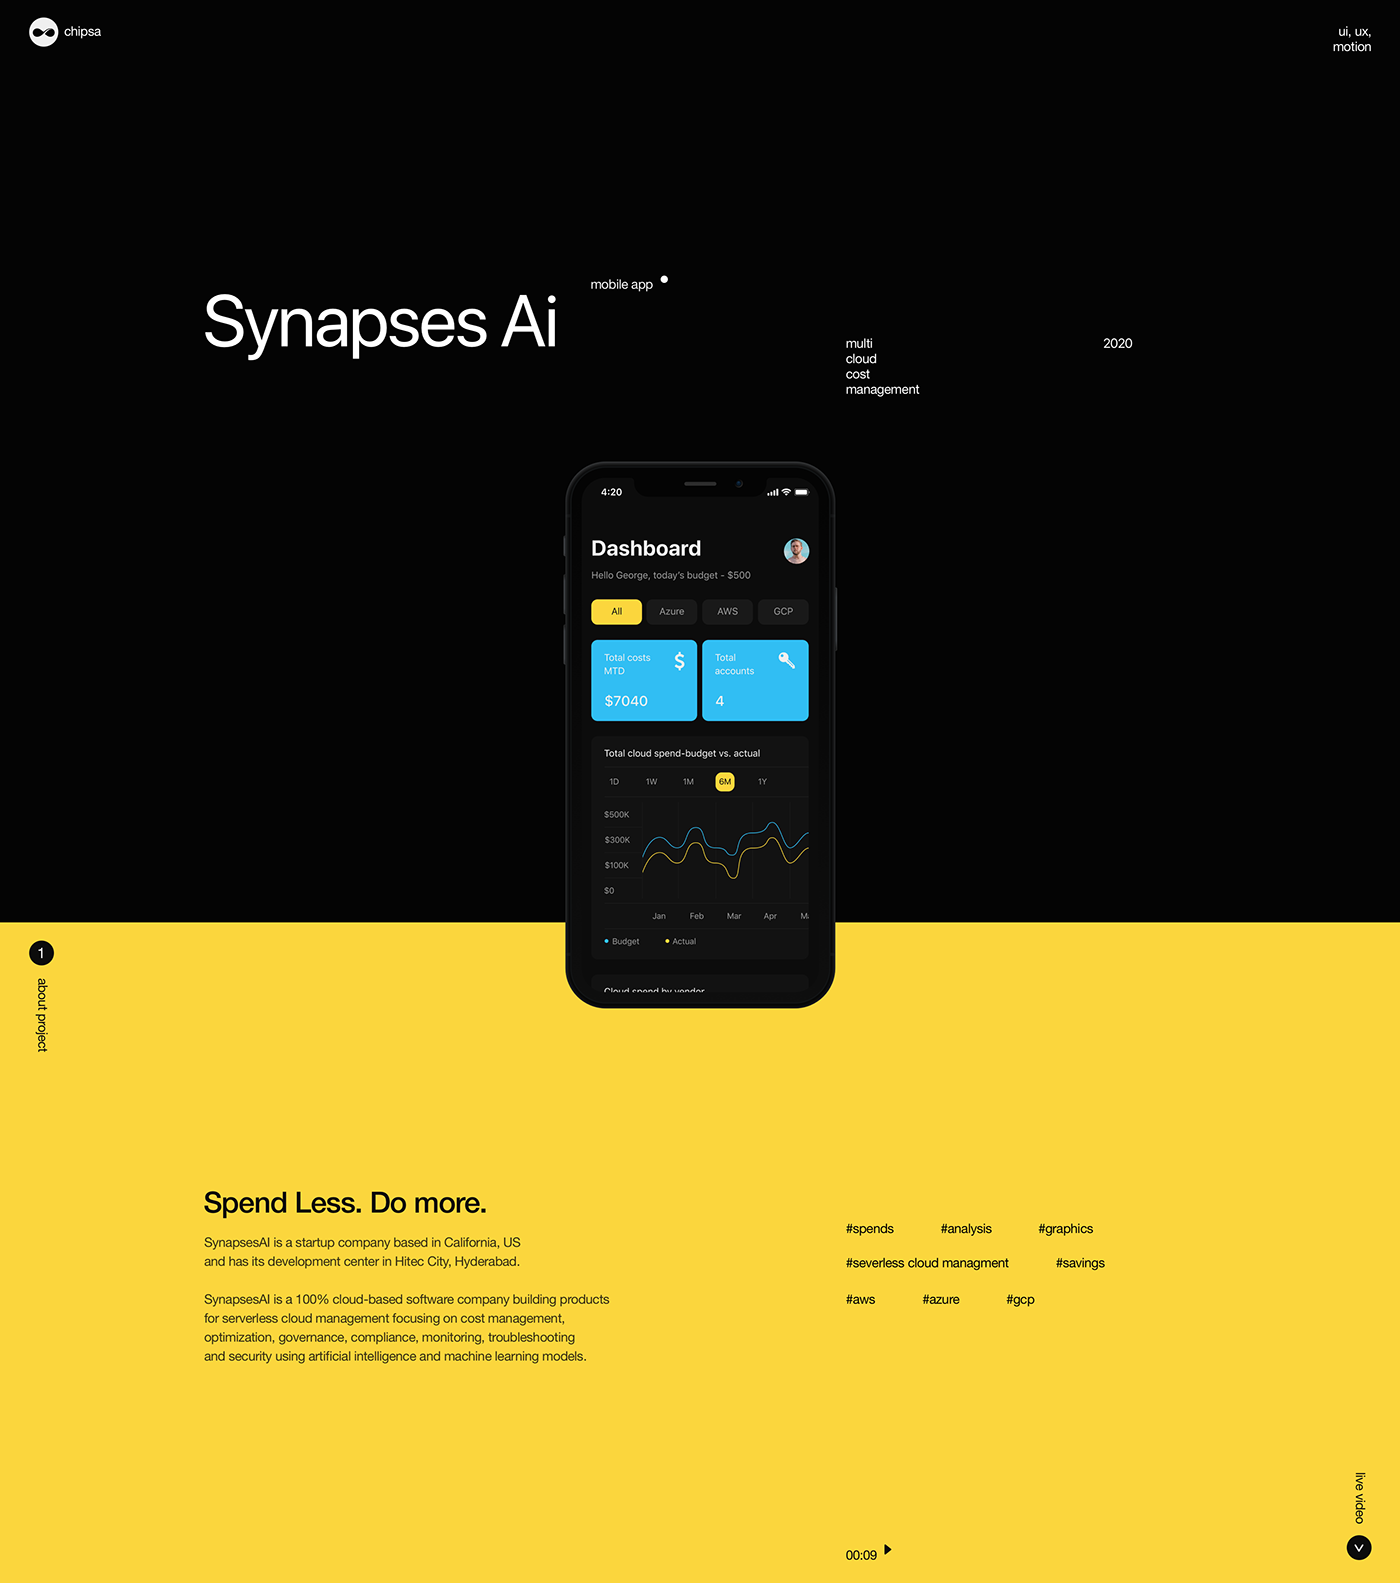 Mobile app inspiration example #408: SynapsesAi - App